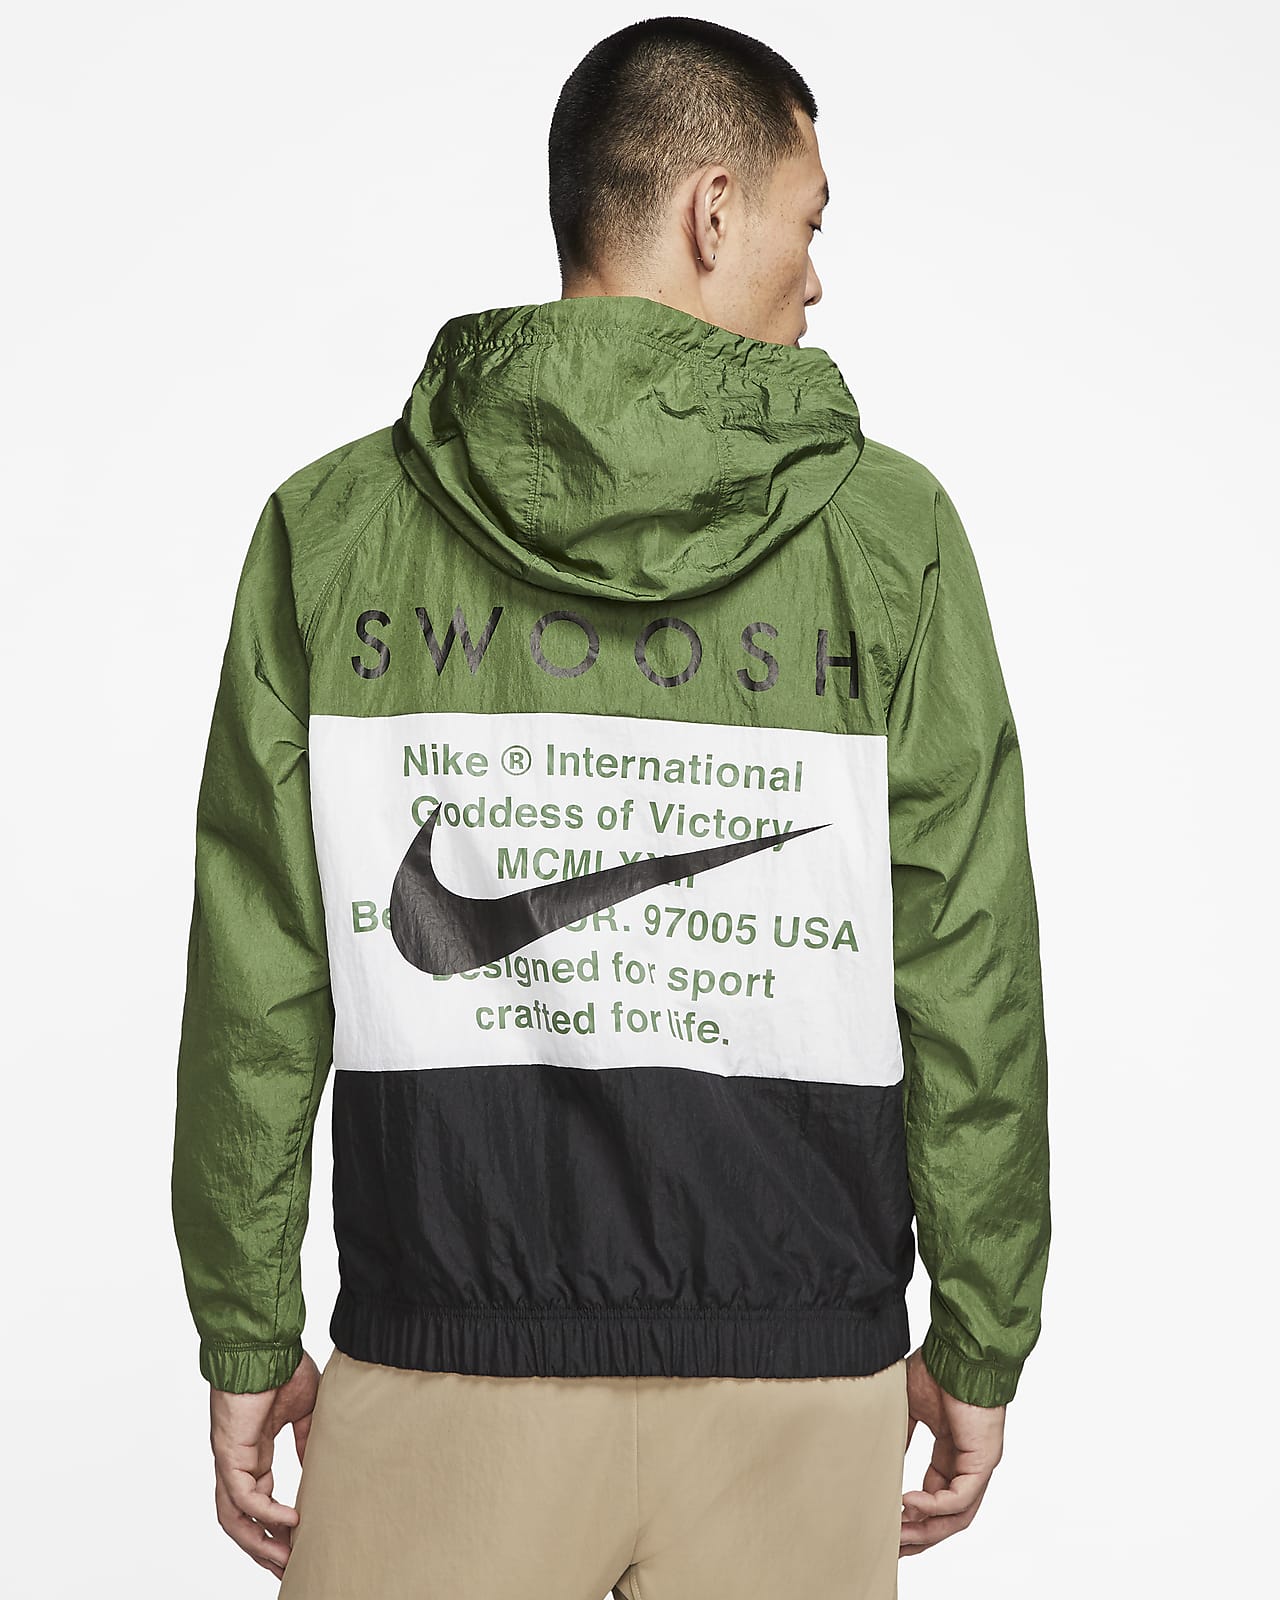 Afskrække delikat overskud Nike Sportswear Swoosh Men's Woven Hooded Jacket. Nike ID